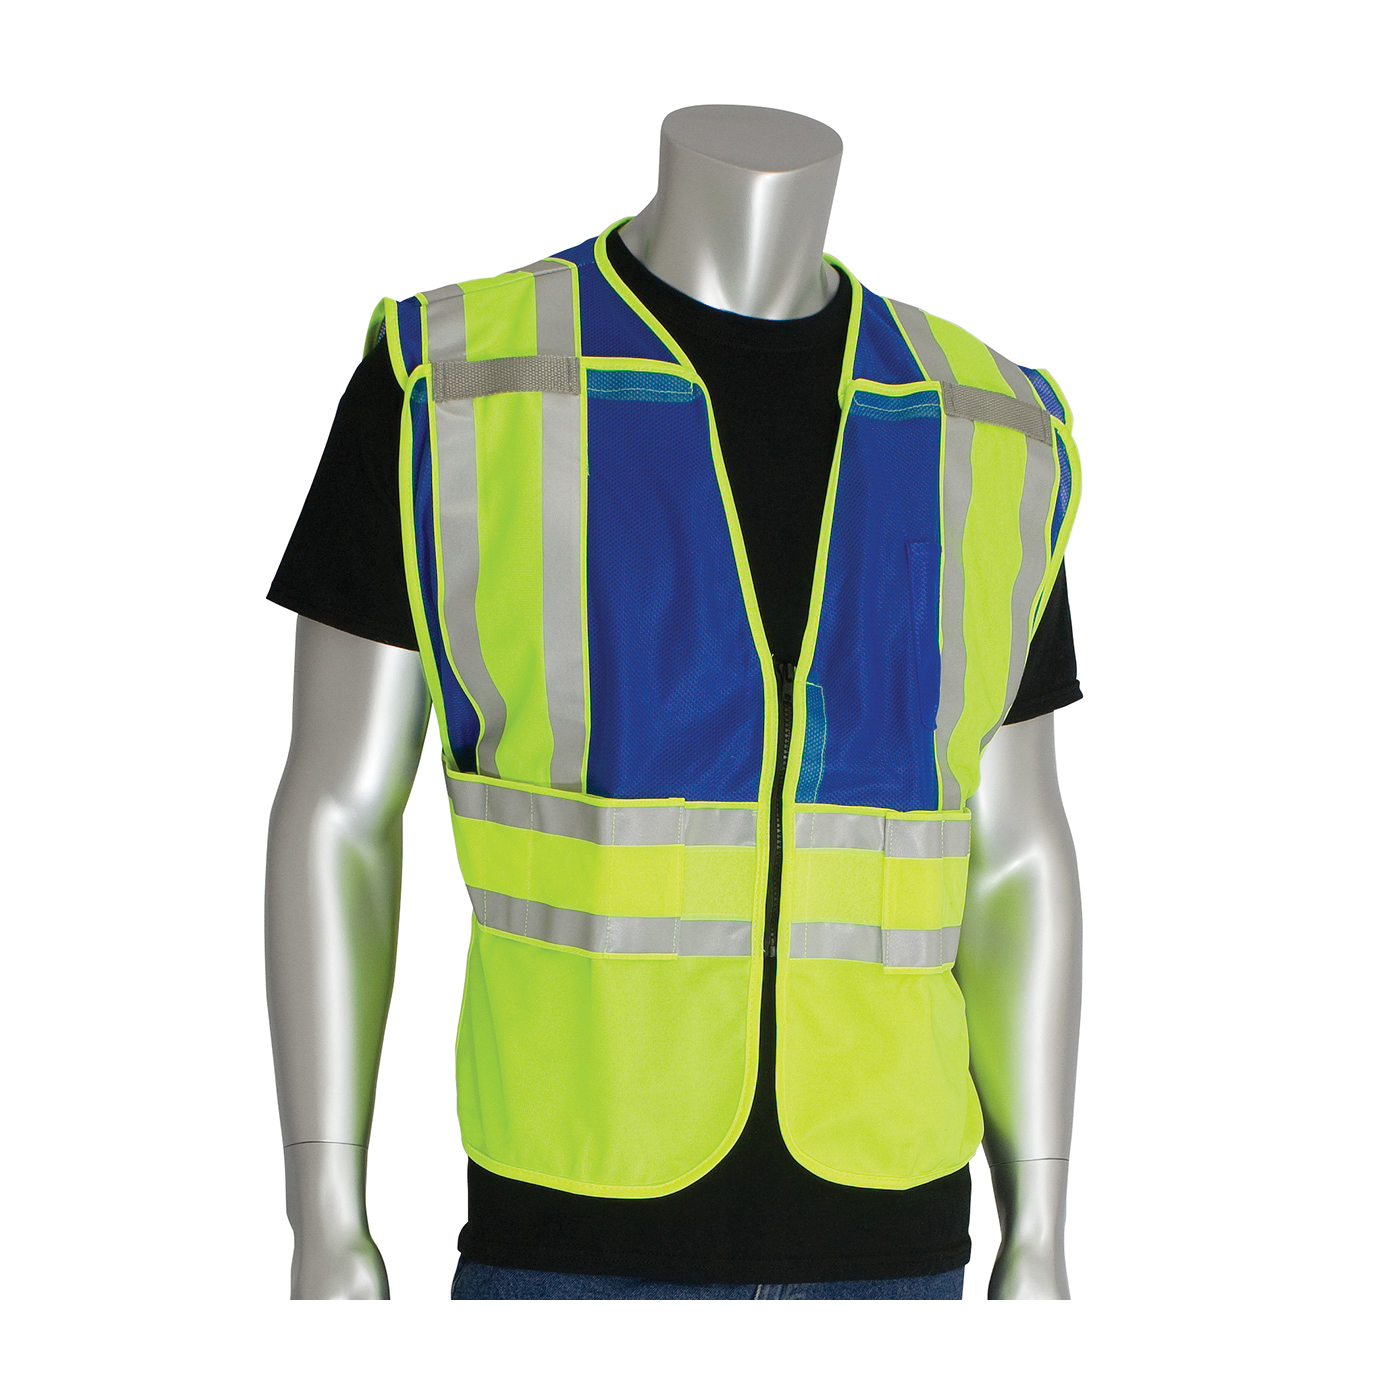 PIP® SafetyGear 302-PSV-BLU-NL-MD/XL Public Safety Vest, M/XL, Blue/Hi-Viz Lime Yellow, Polyester, Front Zipper Closure, 2 Pockets, ANSI Class: Class 2, ANSI 107 Type P